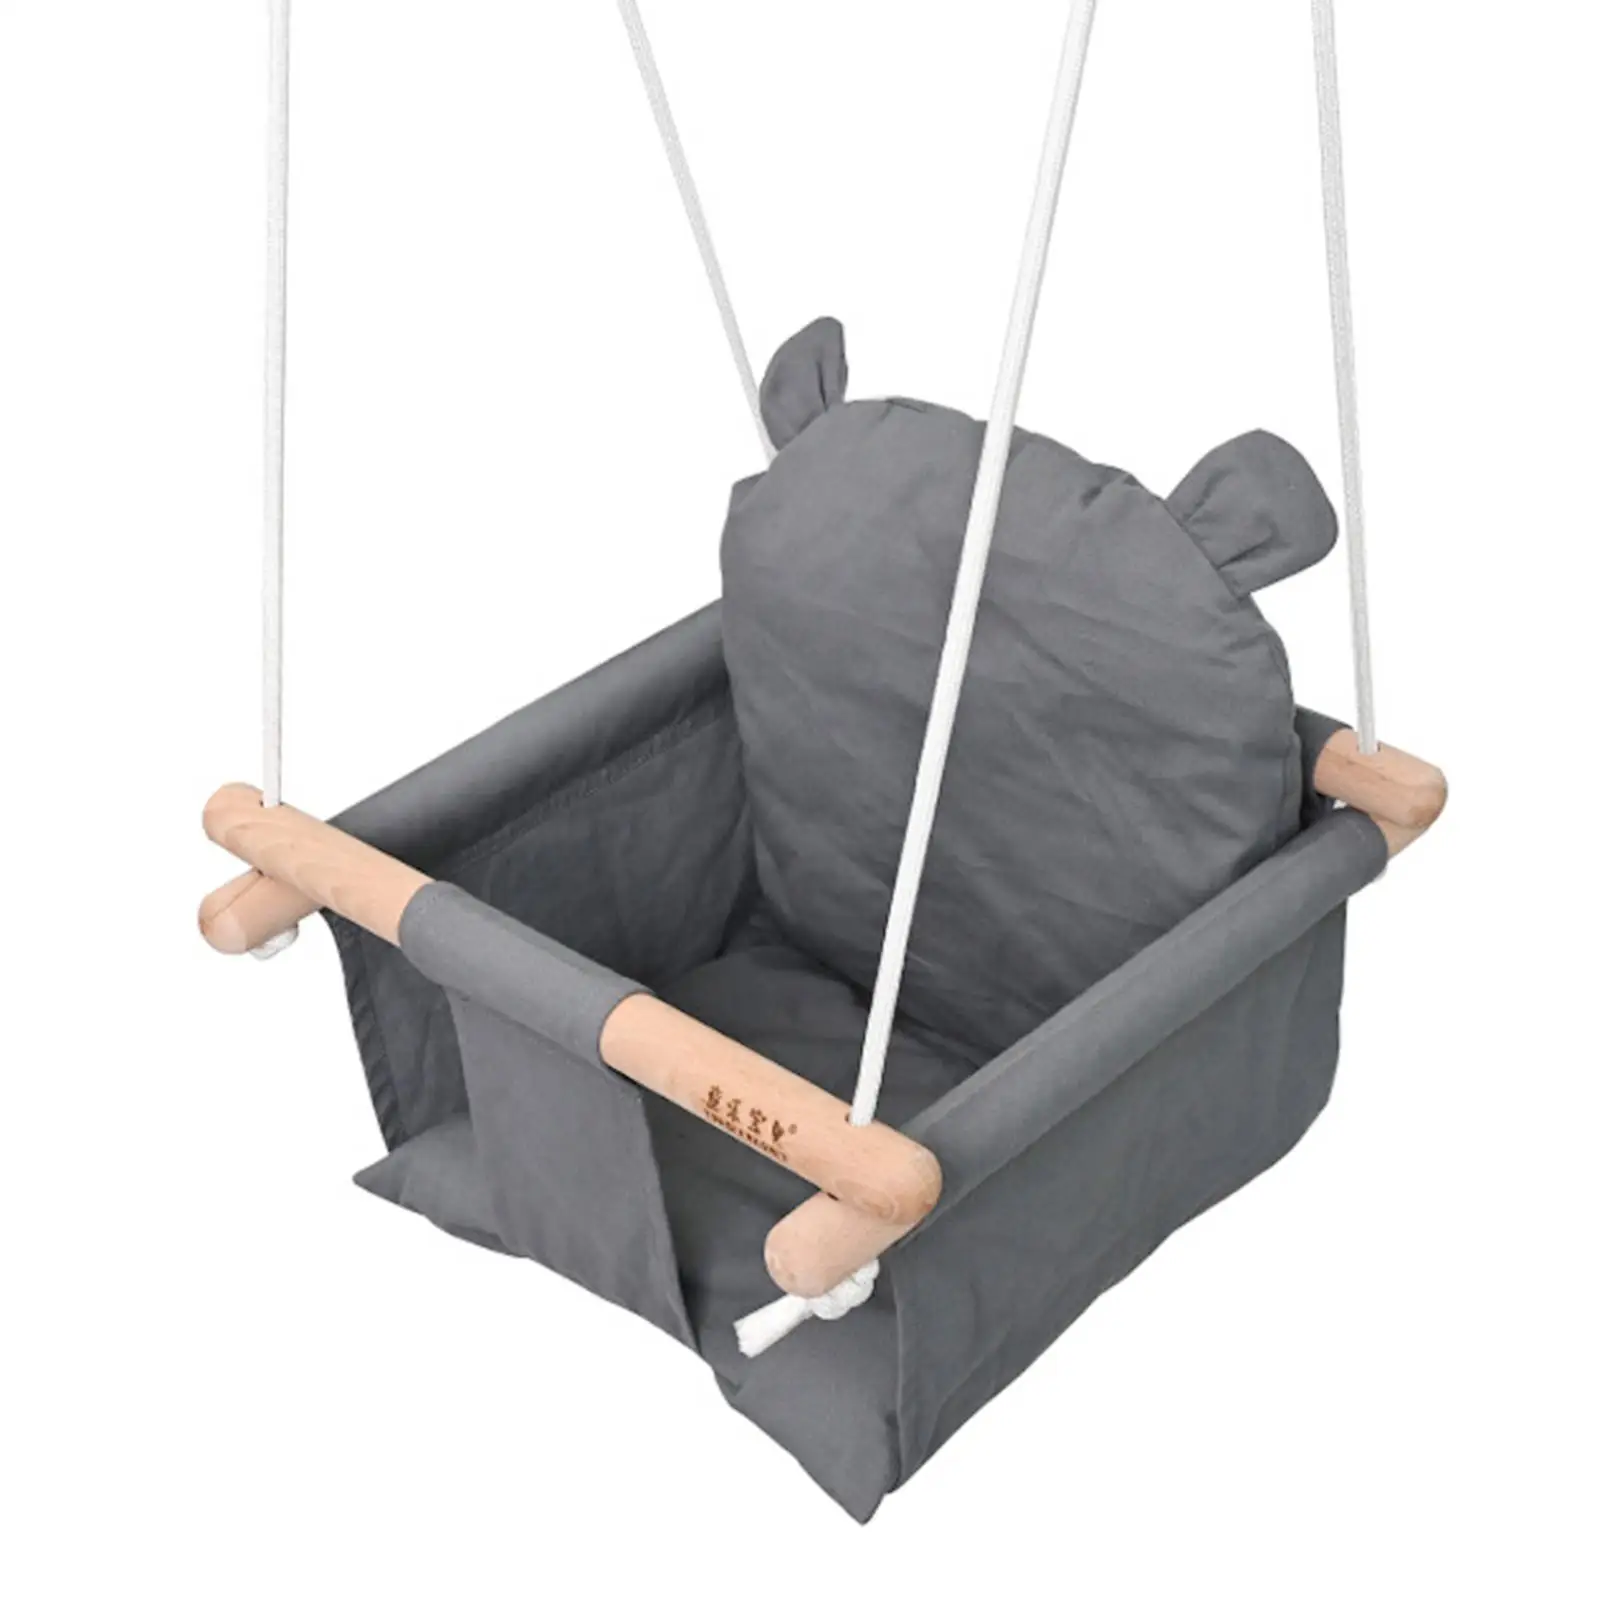 Swing Seat  Hanging Swing Seat Baby Swings for Backyard